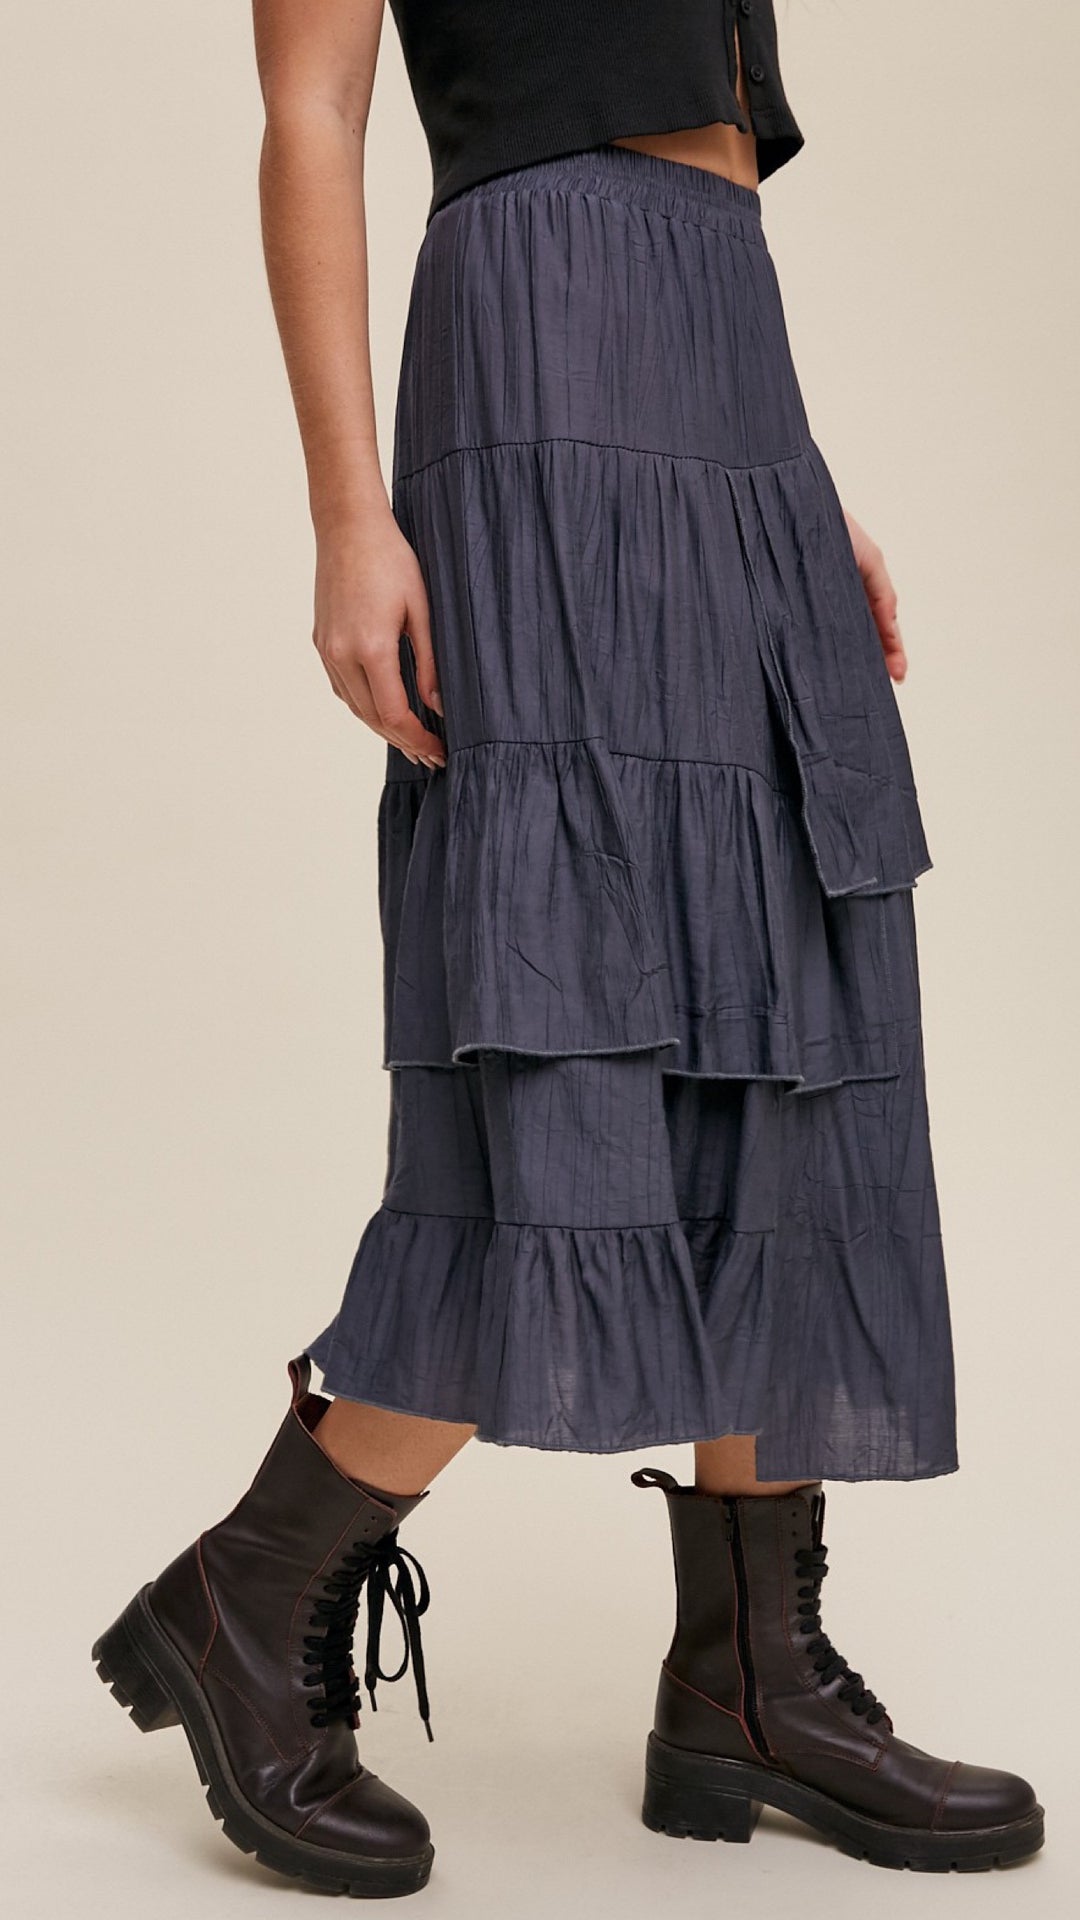 Tiered Asymmetrical Hem Skirt